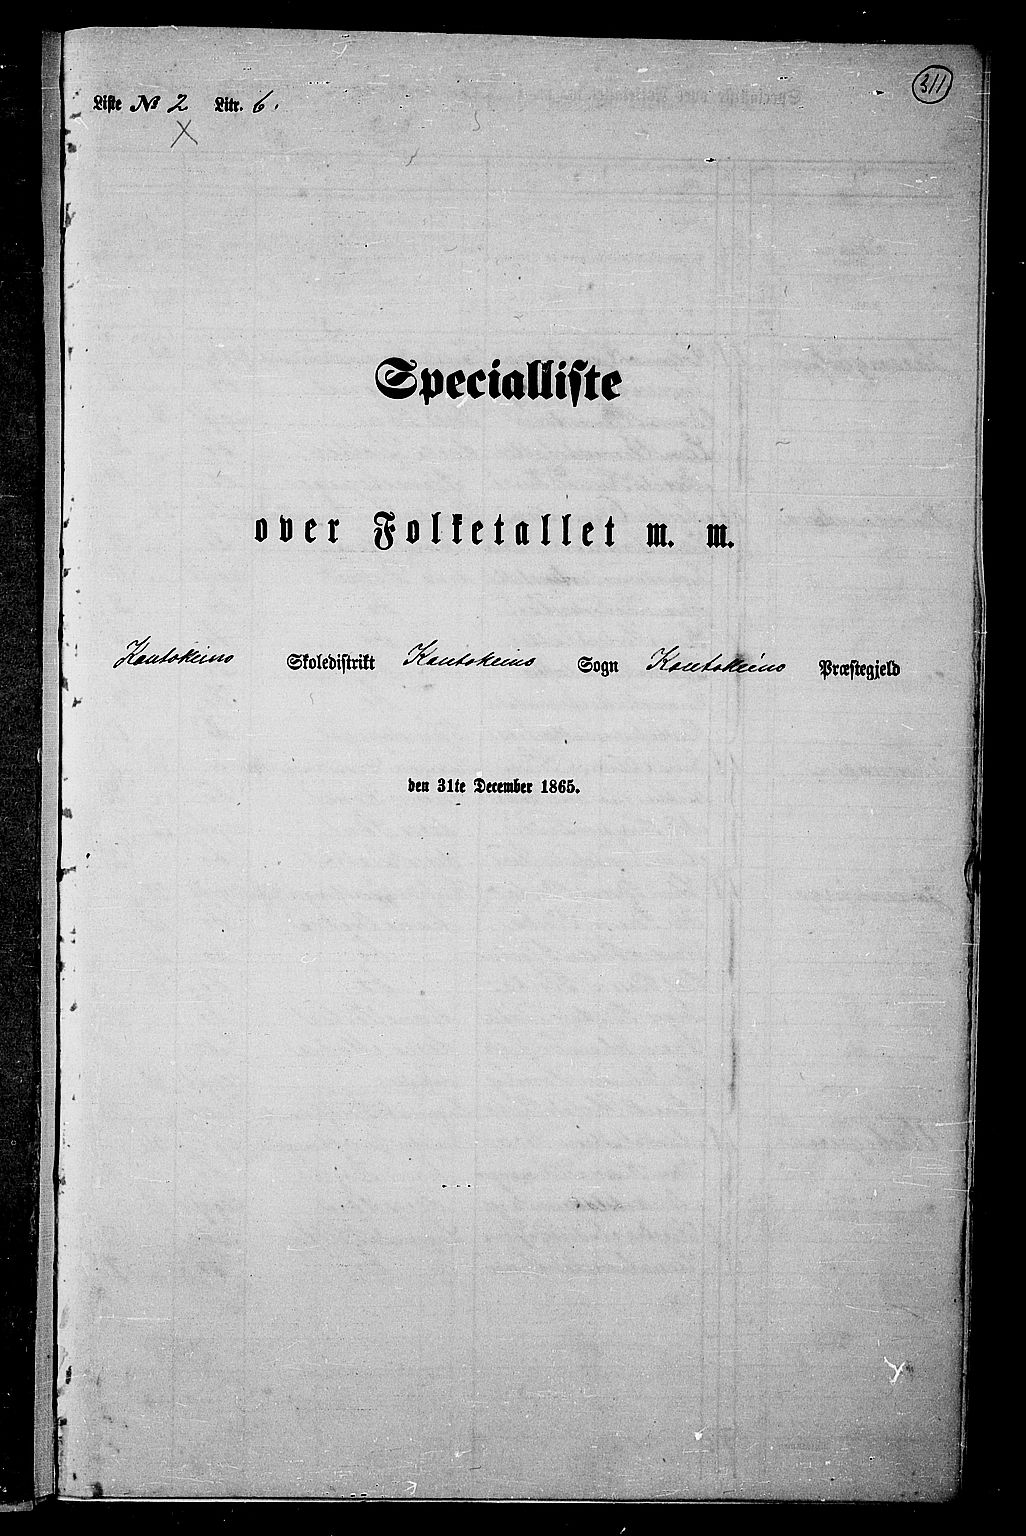 RA, Folketelling 1865 for 2011P Kautokeino prestegjeld, 1865, s. 30